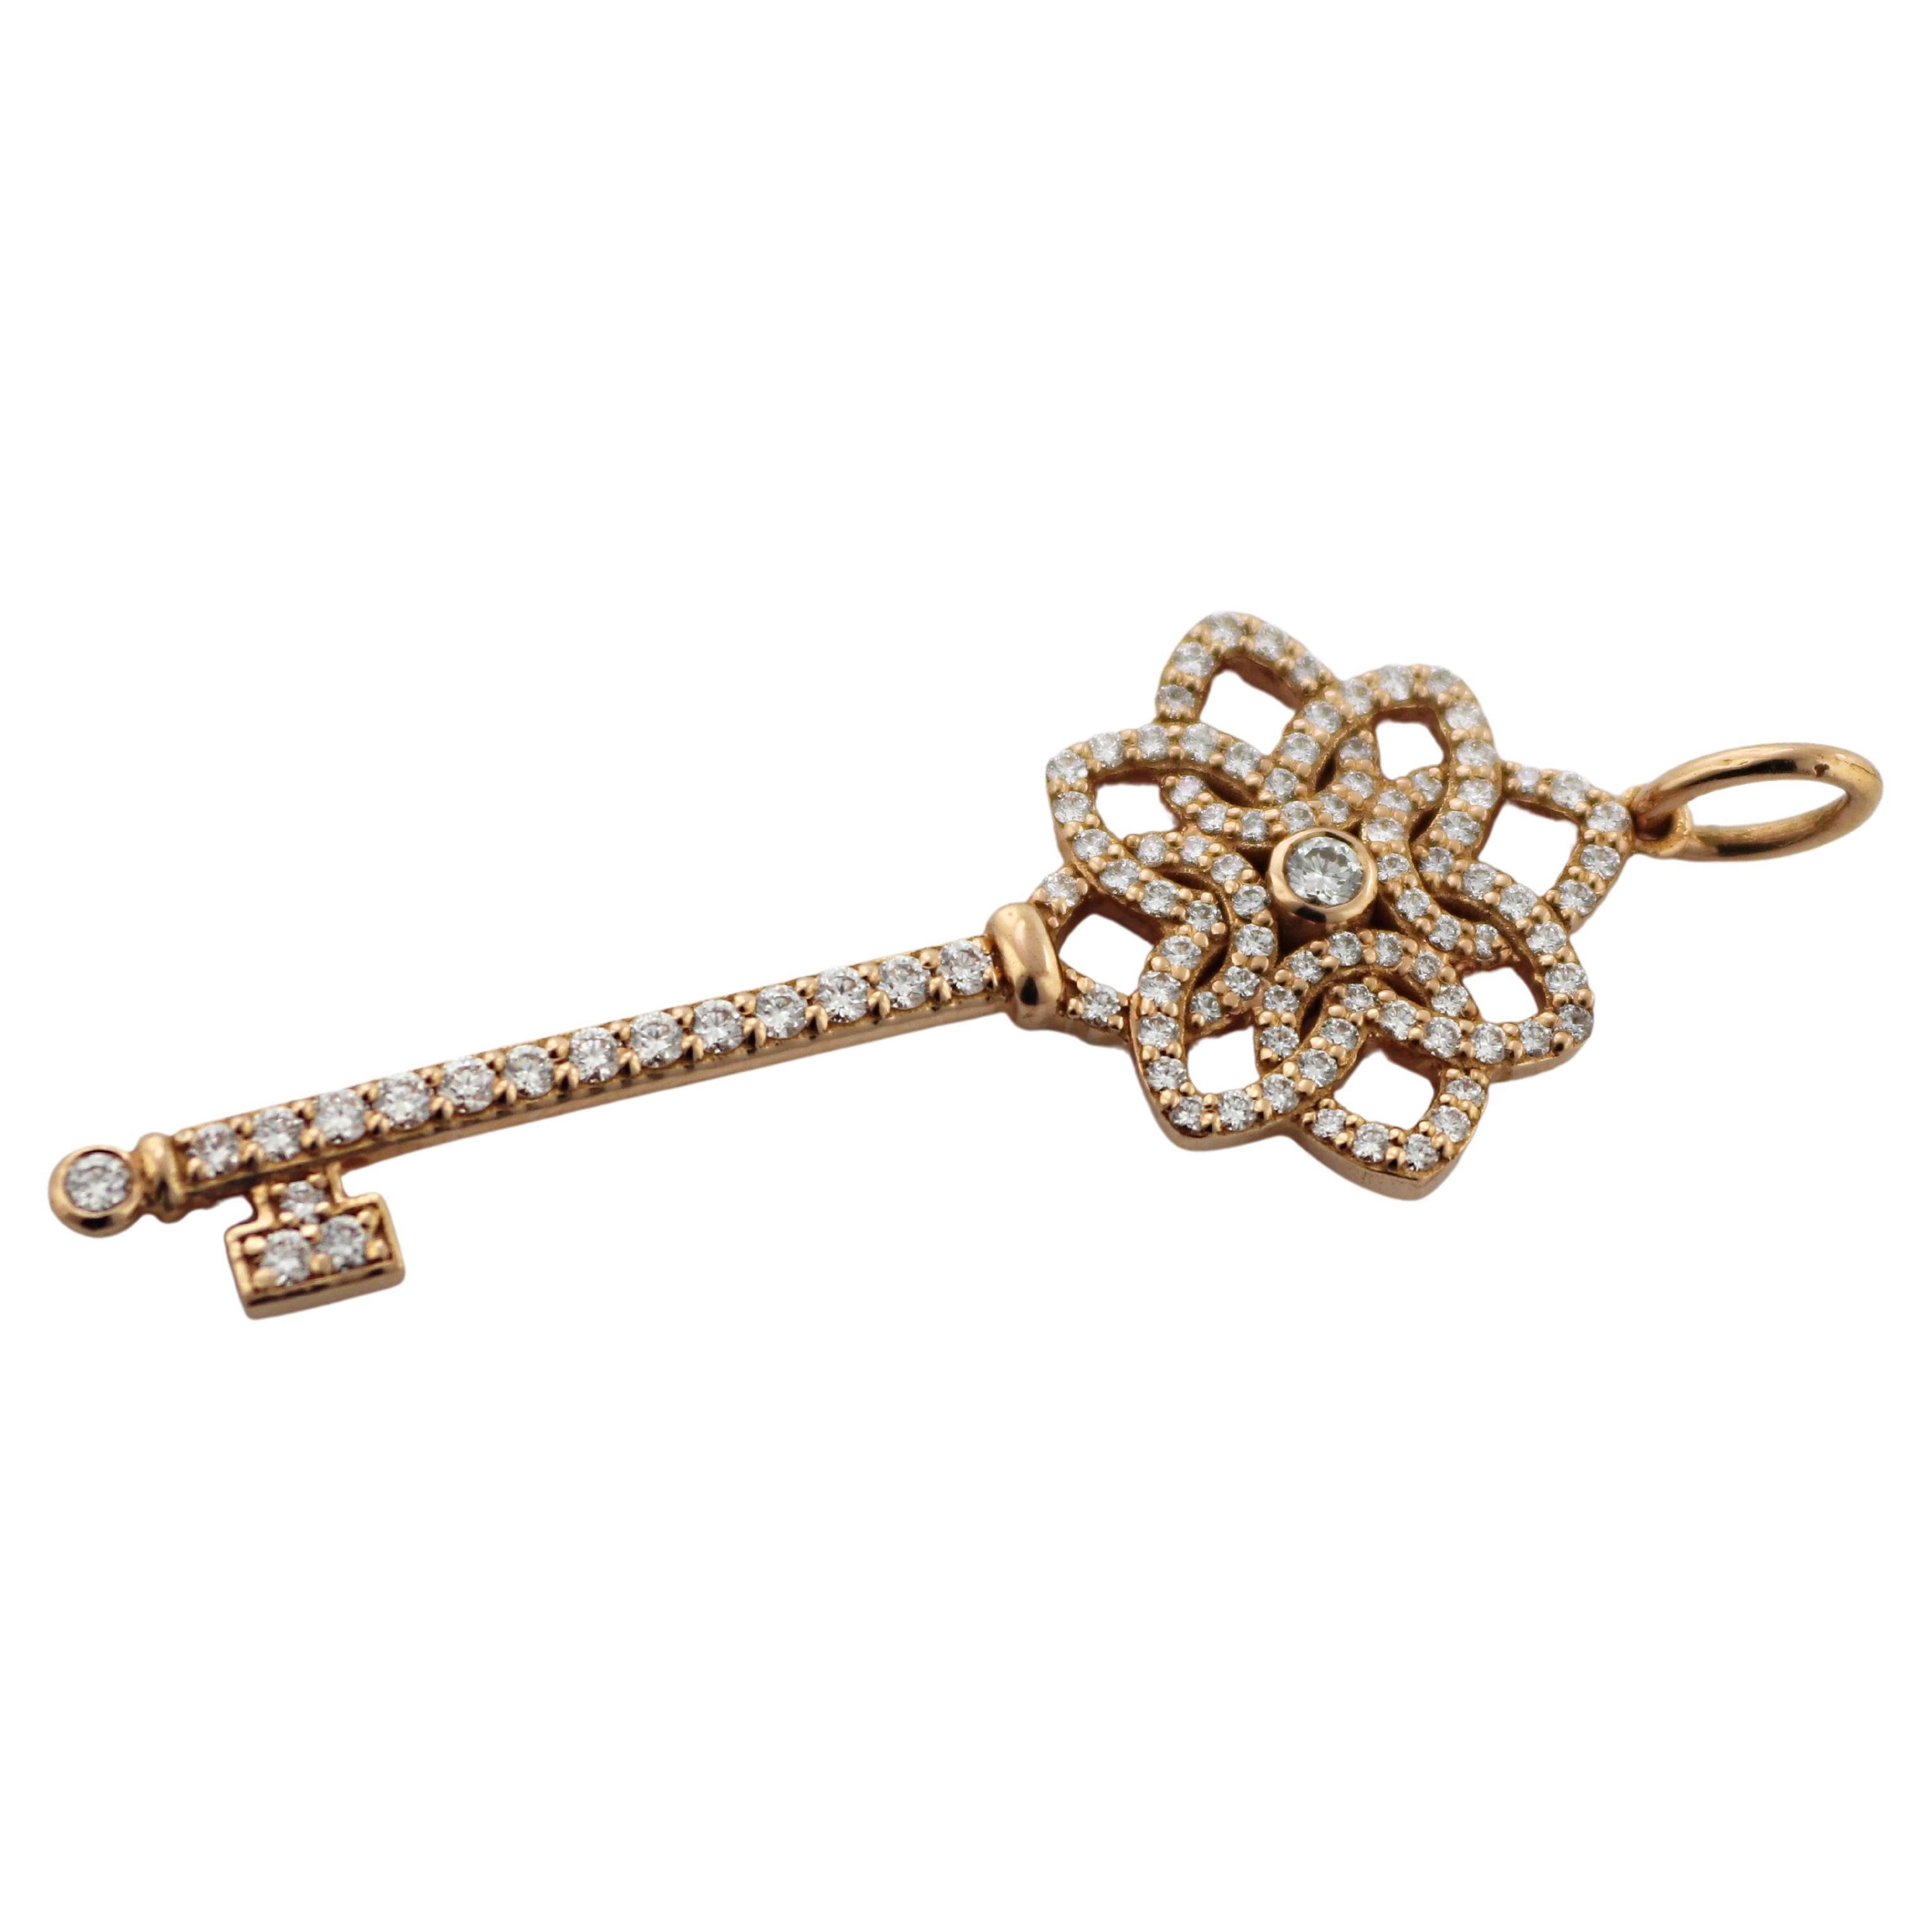 Vintage Tiffany 4-Leaf Clover Key Chain - Show Stable Artisans